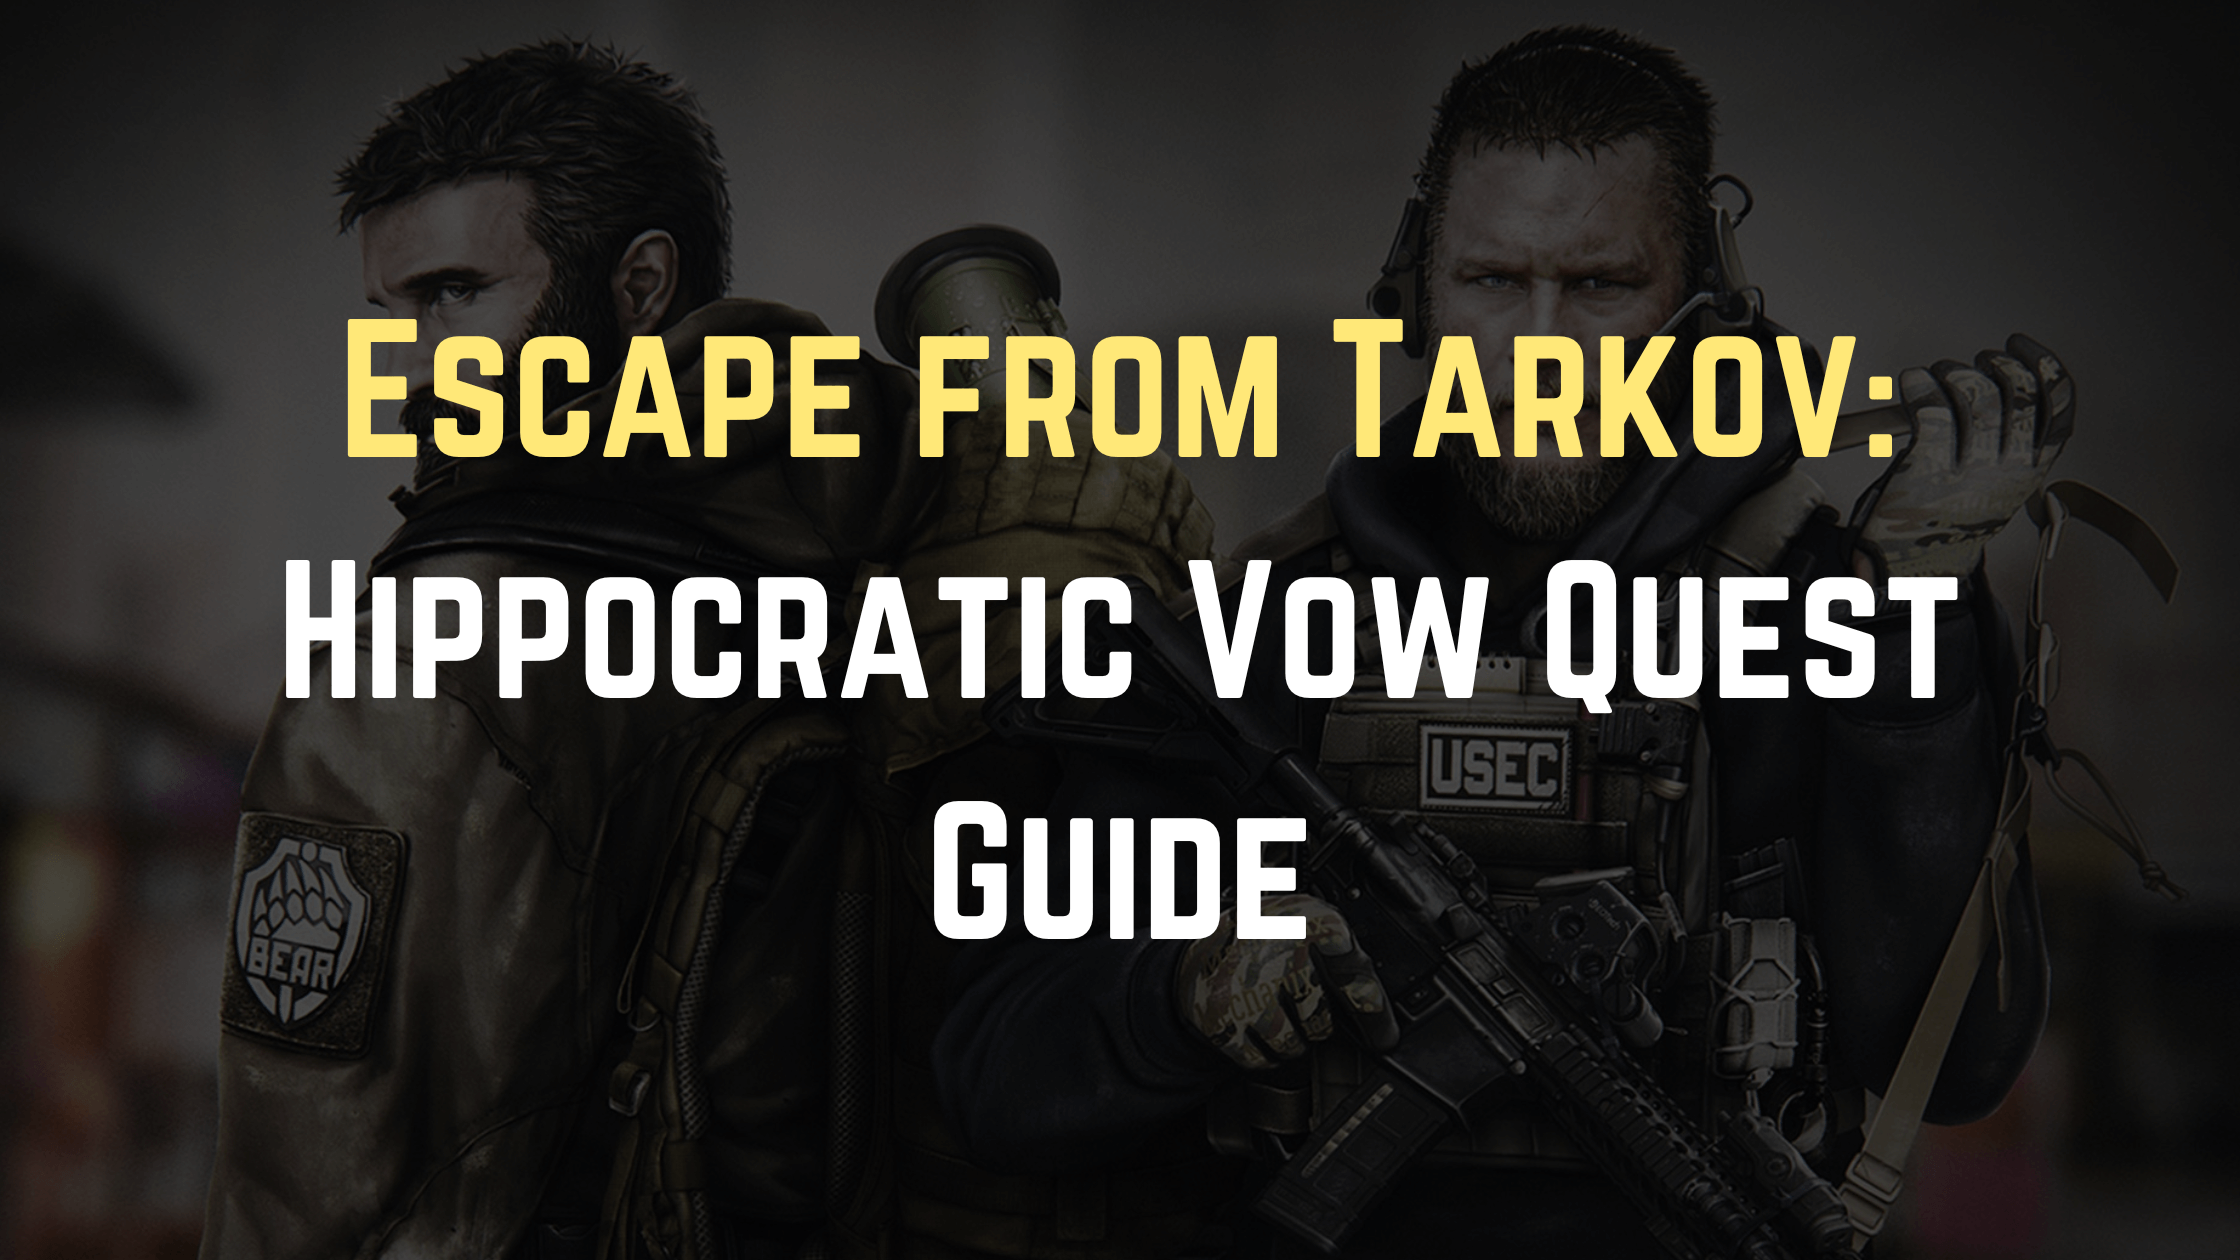 Escape from Tarkov Hippocratic Vow Quest Guide